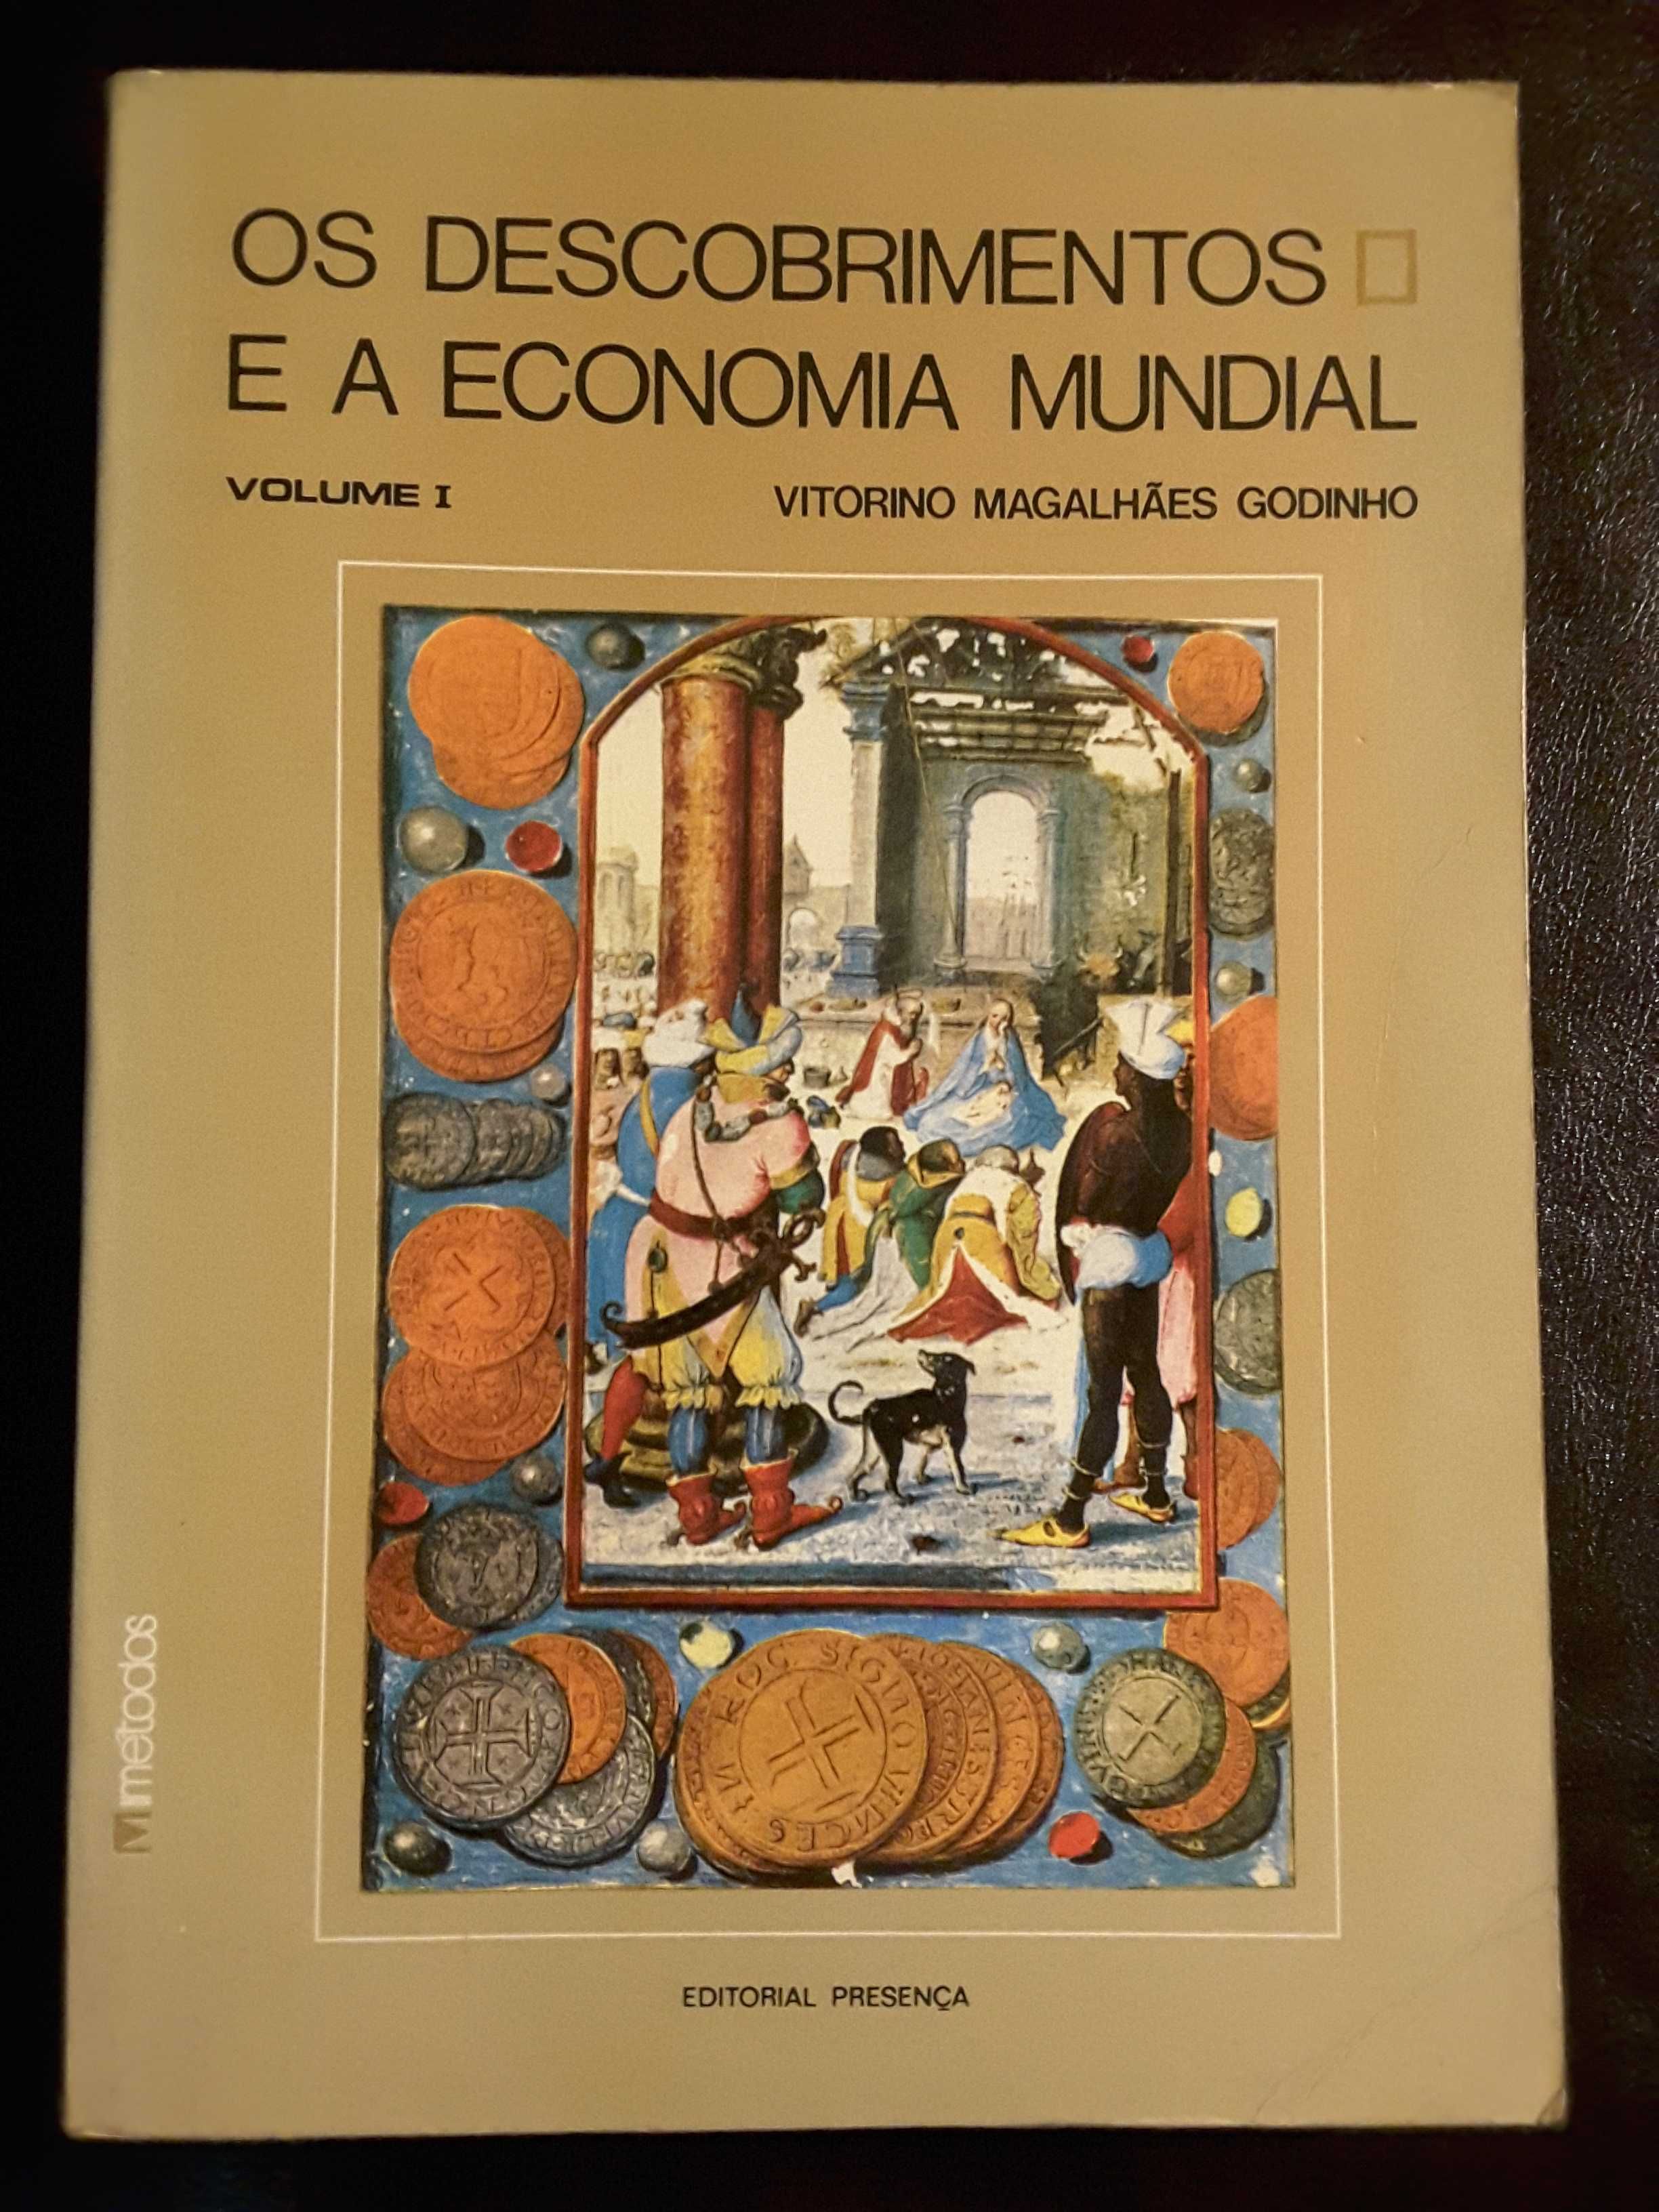 Os Descobrimentos e a Economia Mundial / André de Resende